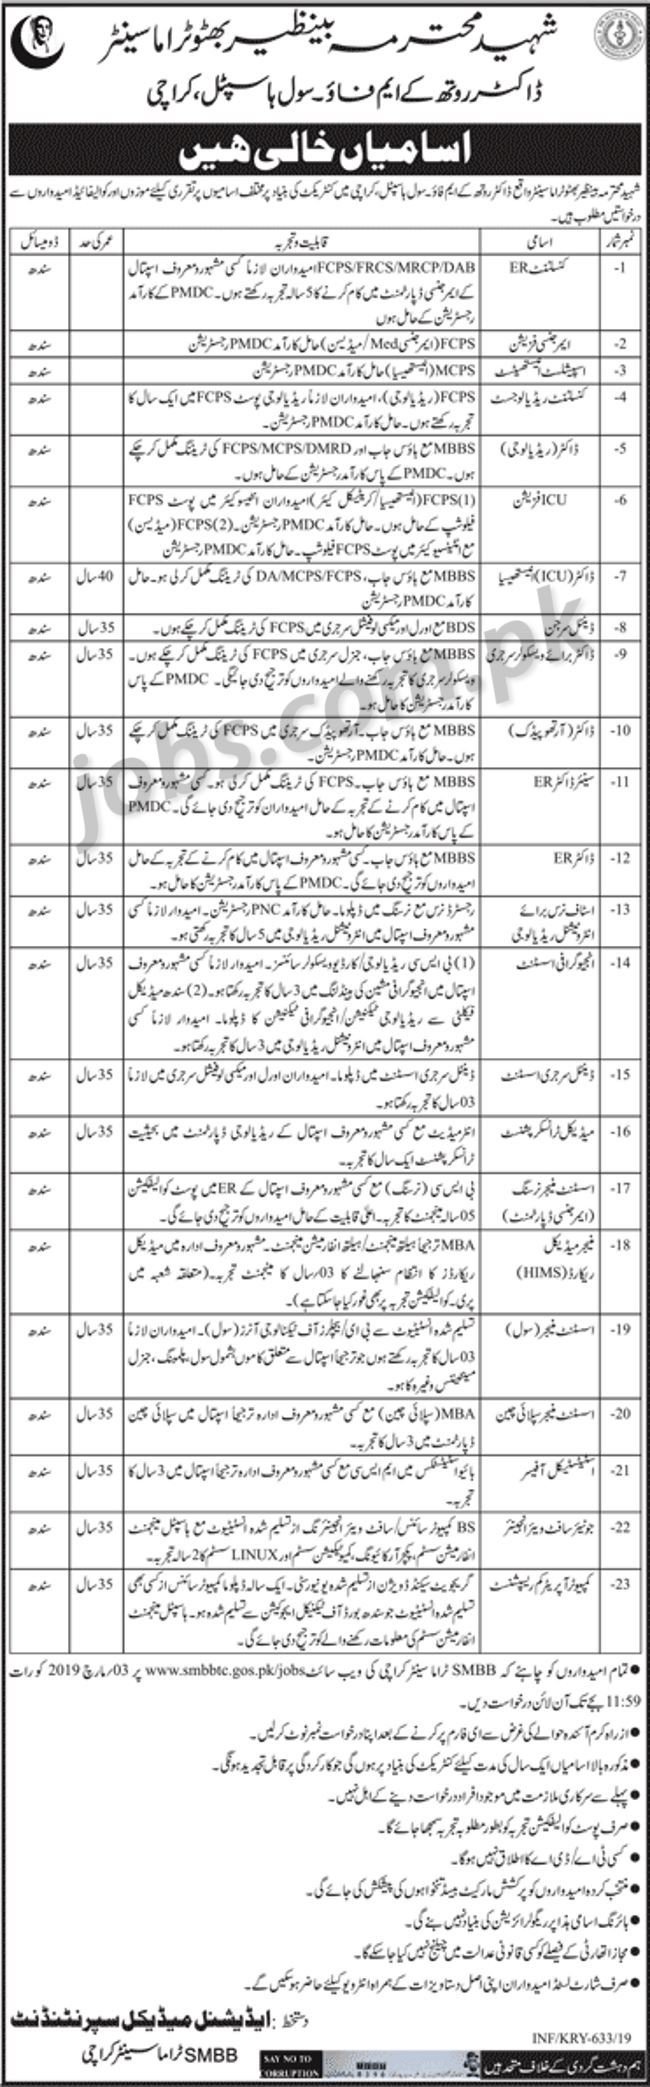 Civil Hospital Karachi Jobs 2019 for 23+ Posts (Multiple Categories)